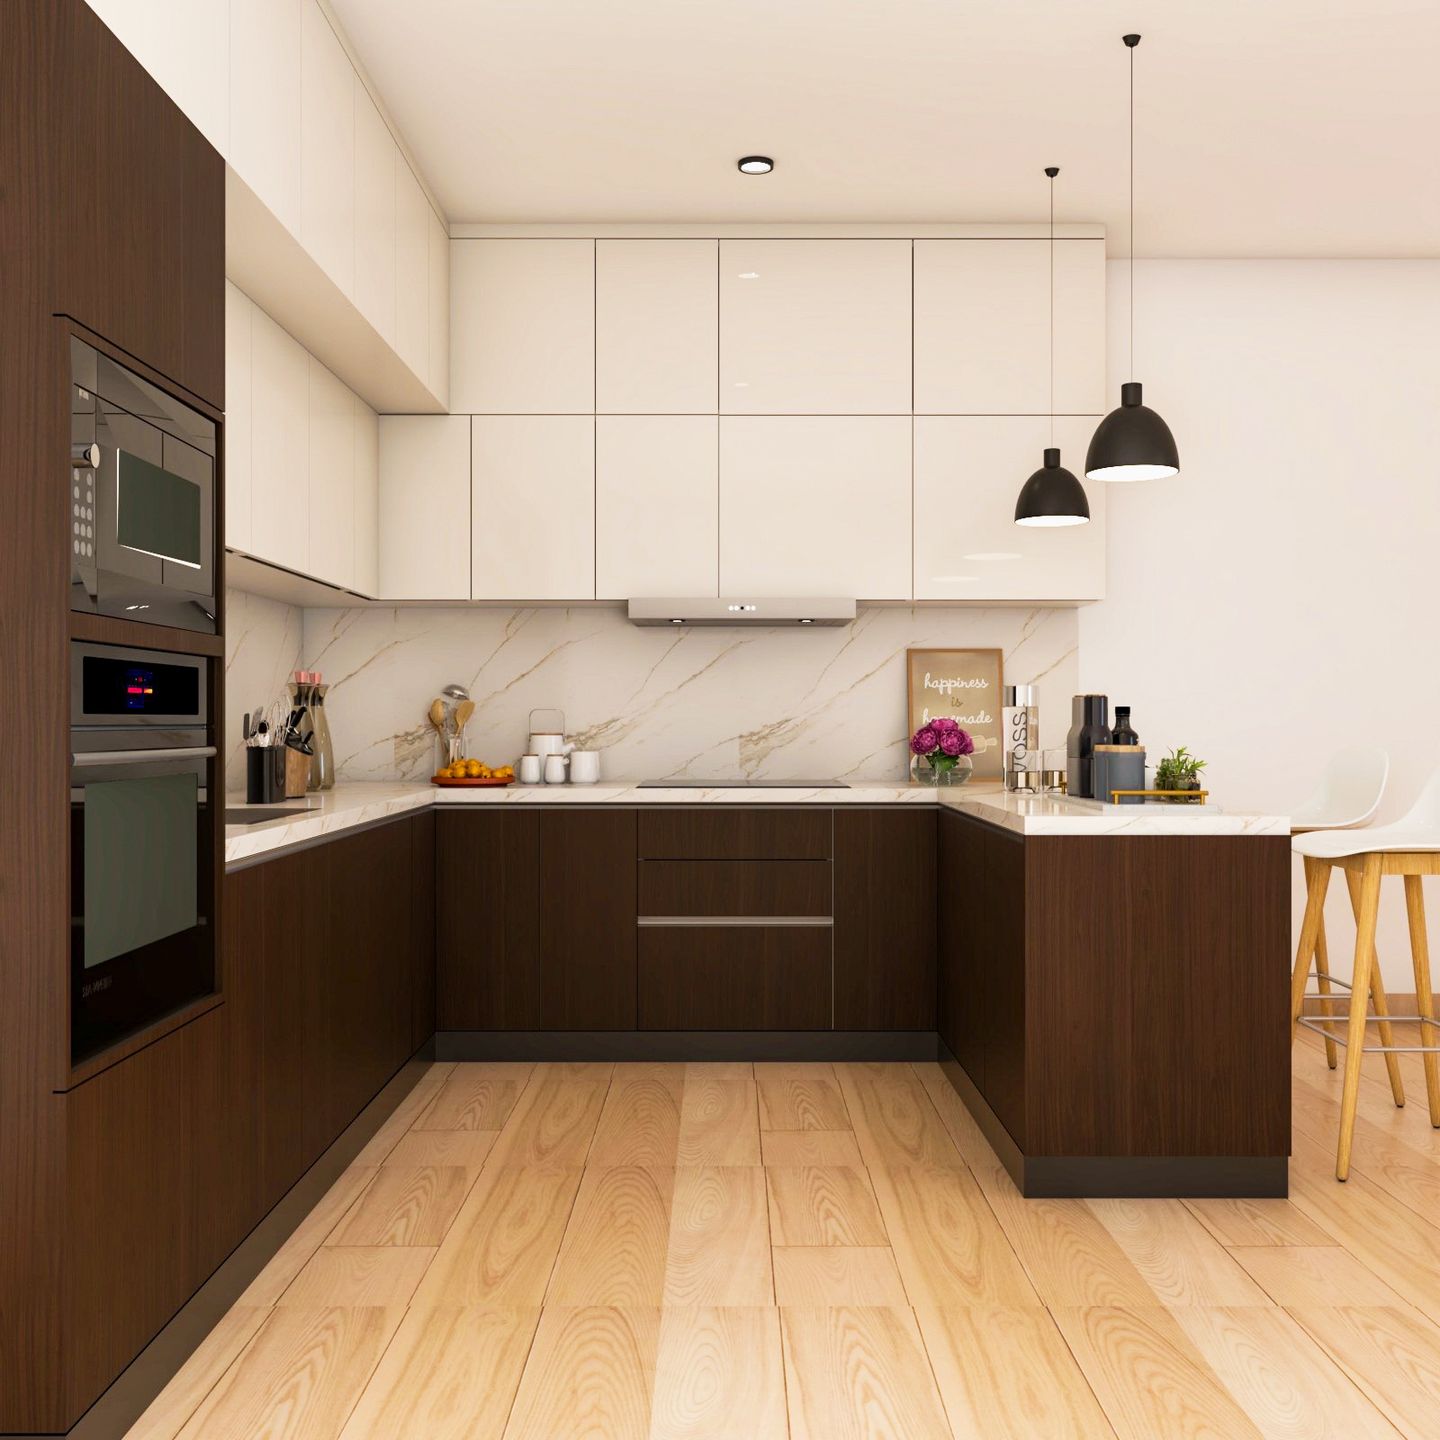 Spacious Brown and White Peninsula Kitchen Design with Quartz Countertop - Livspace